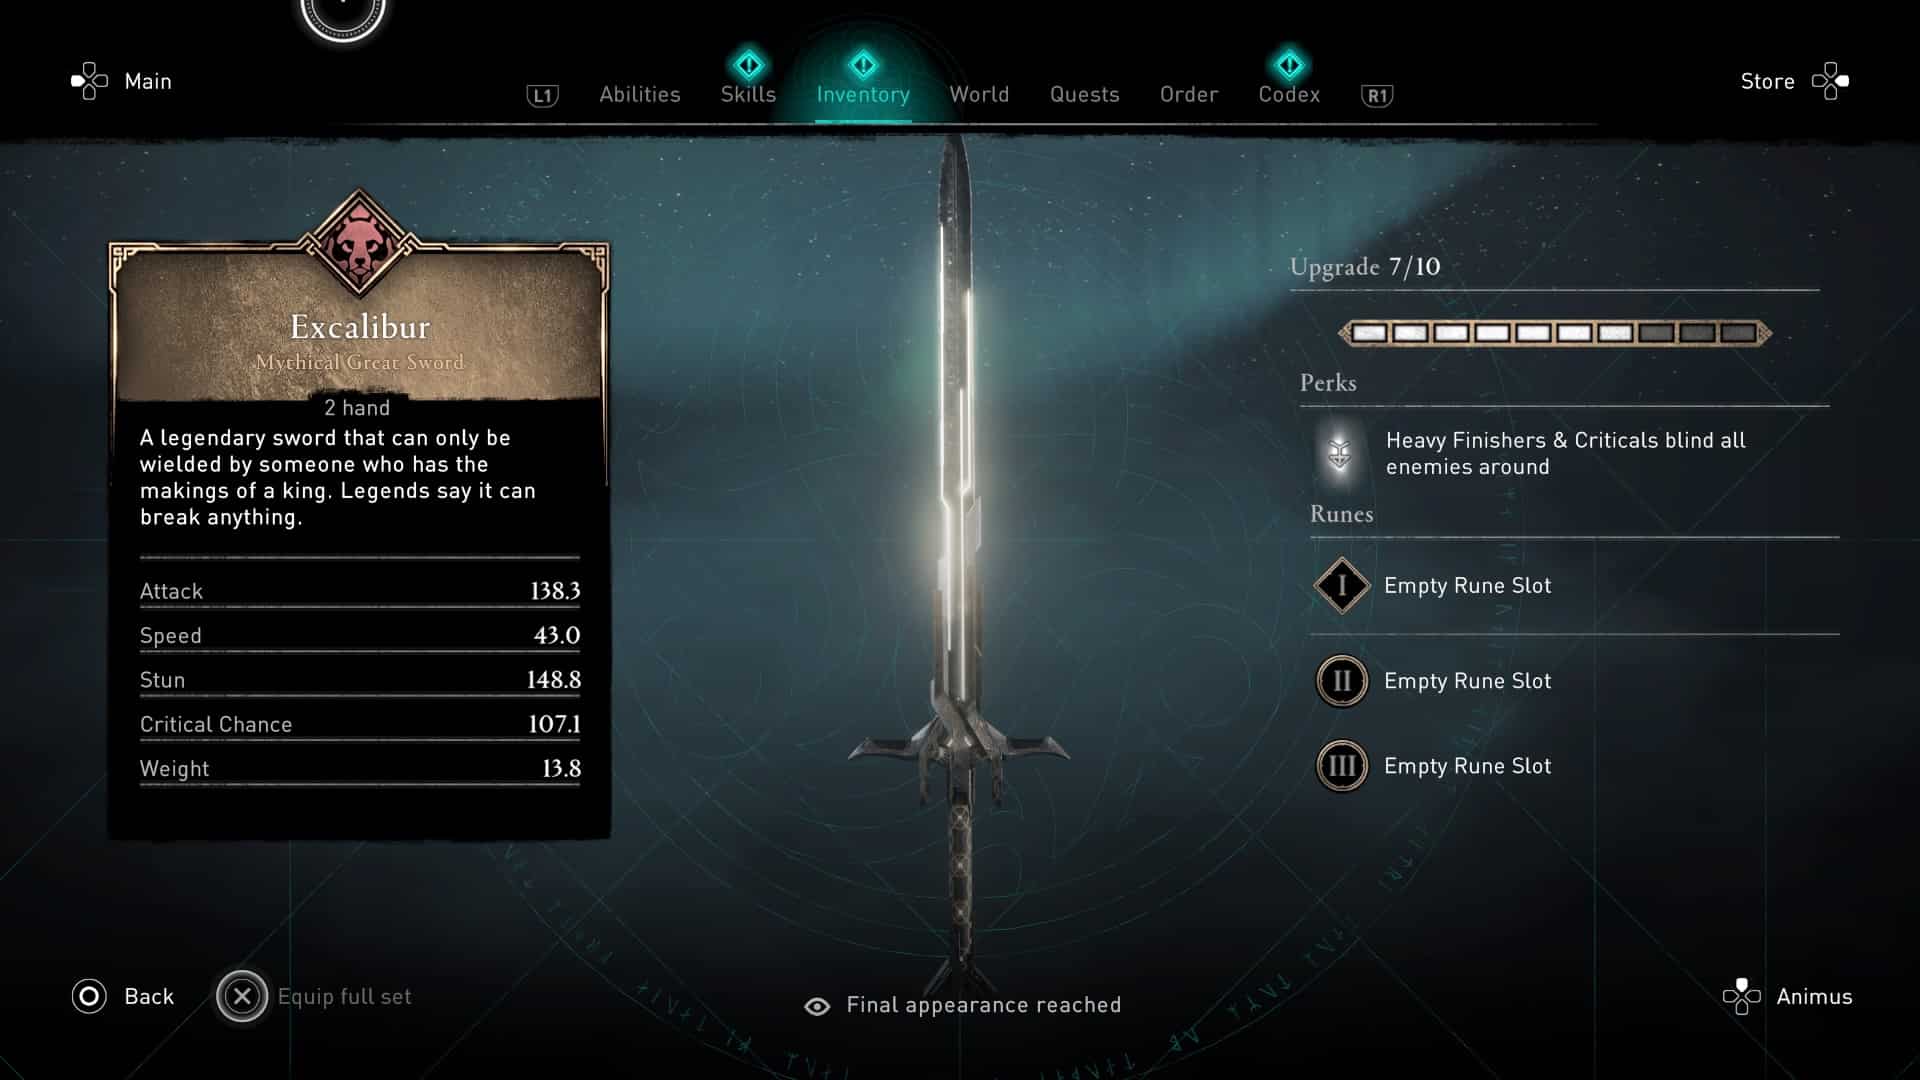 Excalibur assassin's creed Valhalla swords